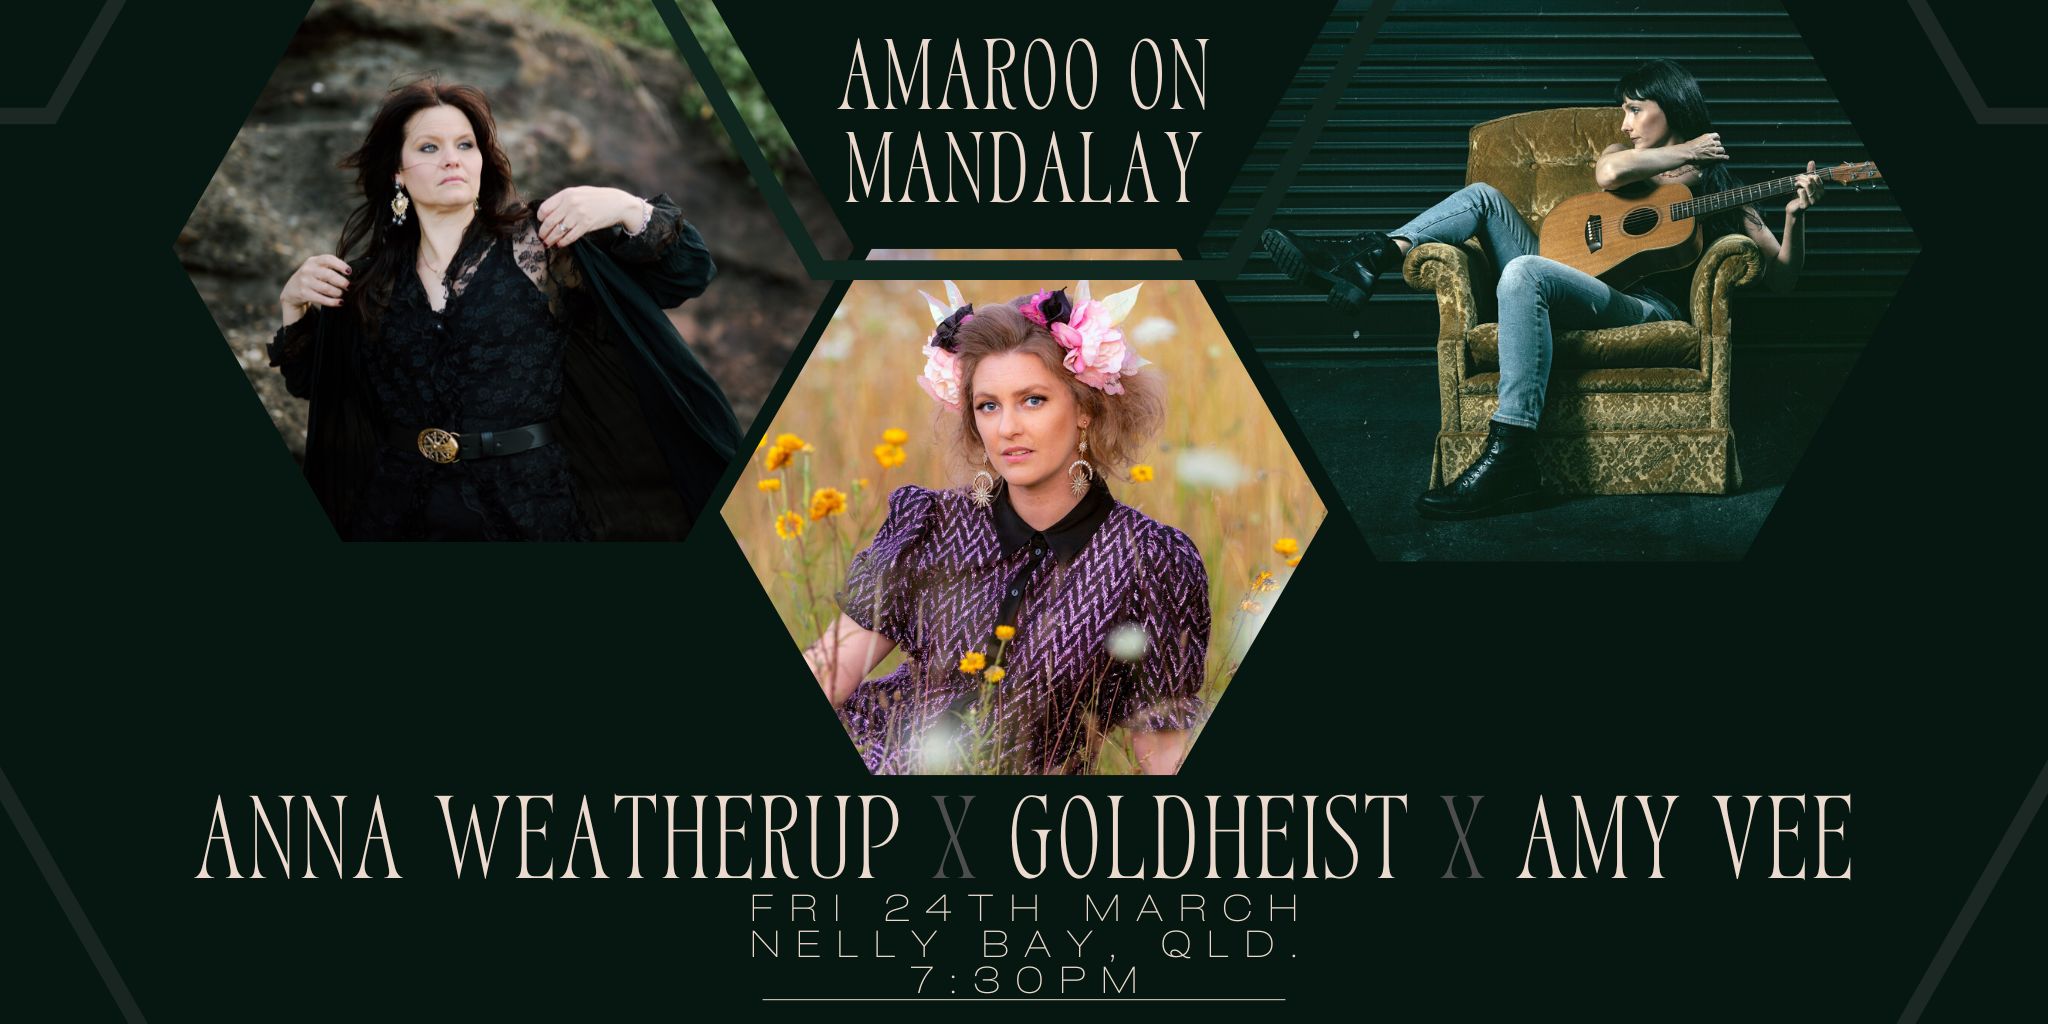 What's On Magnetic Island - Amaroo On Mandalay - Anna Weatherup - Amy Vee - Goldheist